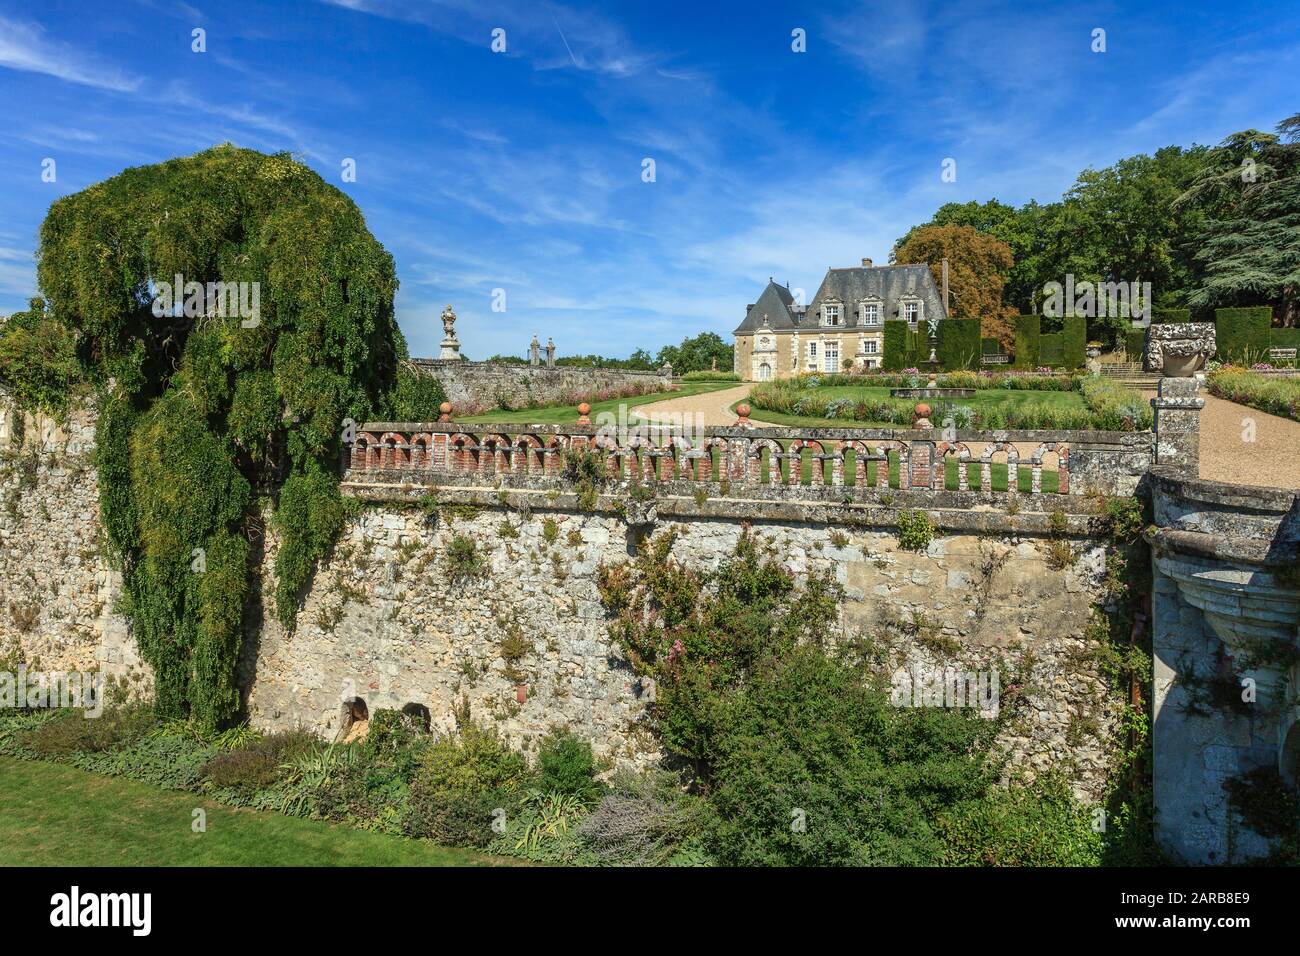 France, Indre et Loire, Chancay, Chateau de Valmer gardens, castle moats and sophora weeping (Styphnolobium japonicum 'Pendula') (obligatory mention C Stock Photo